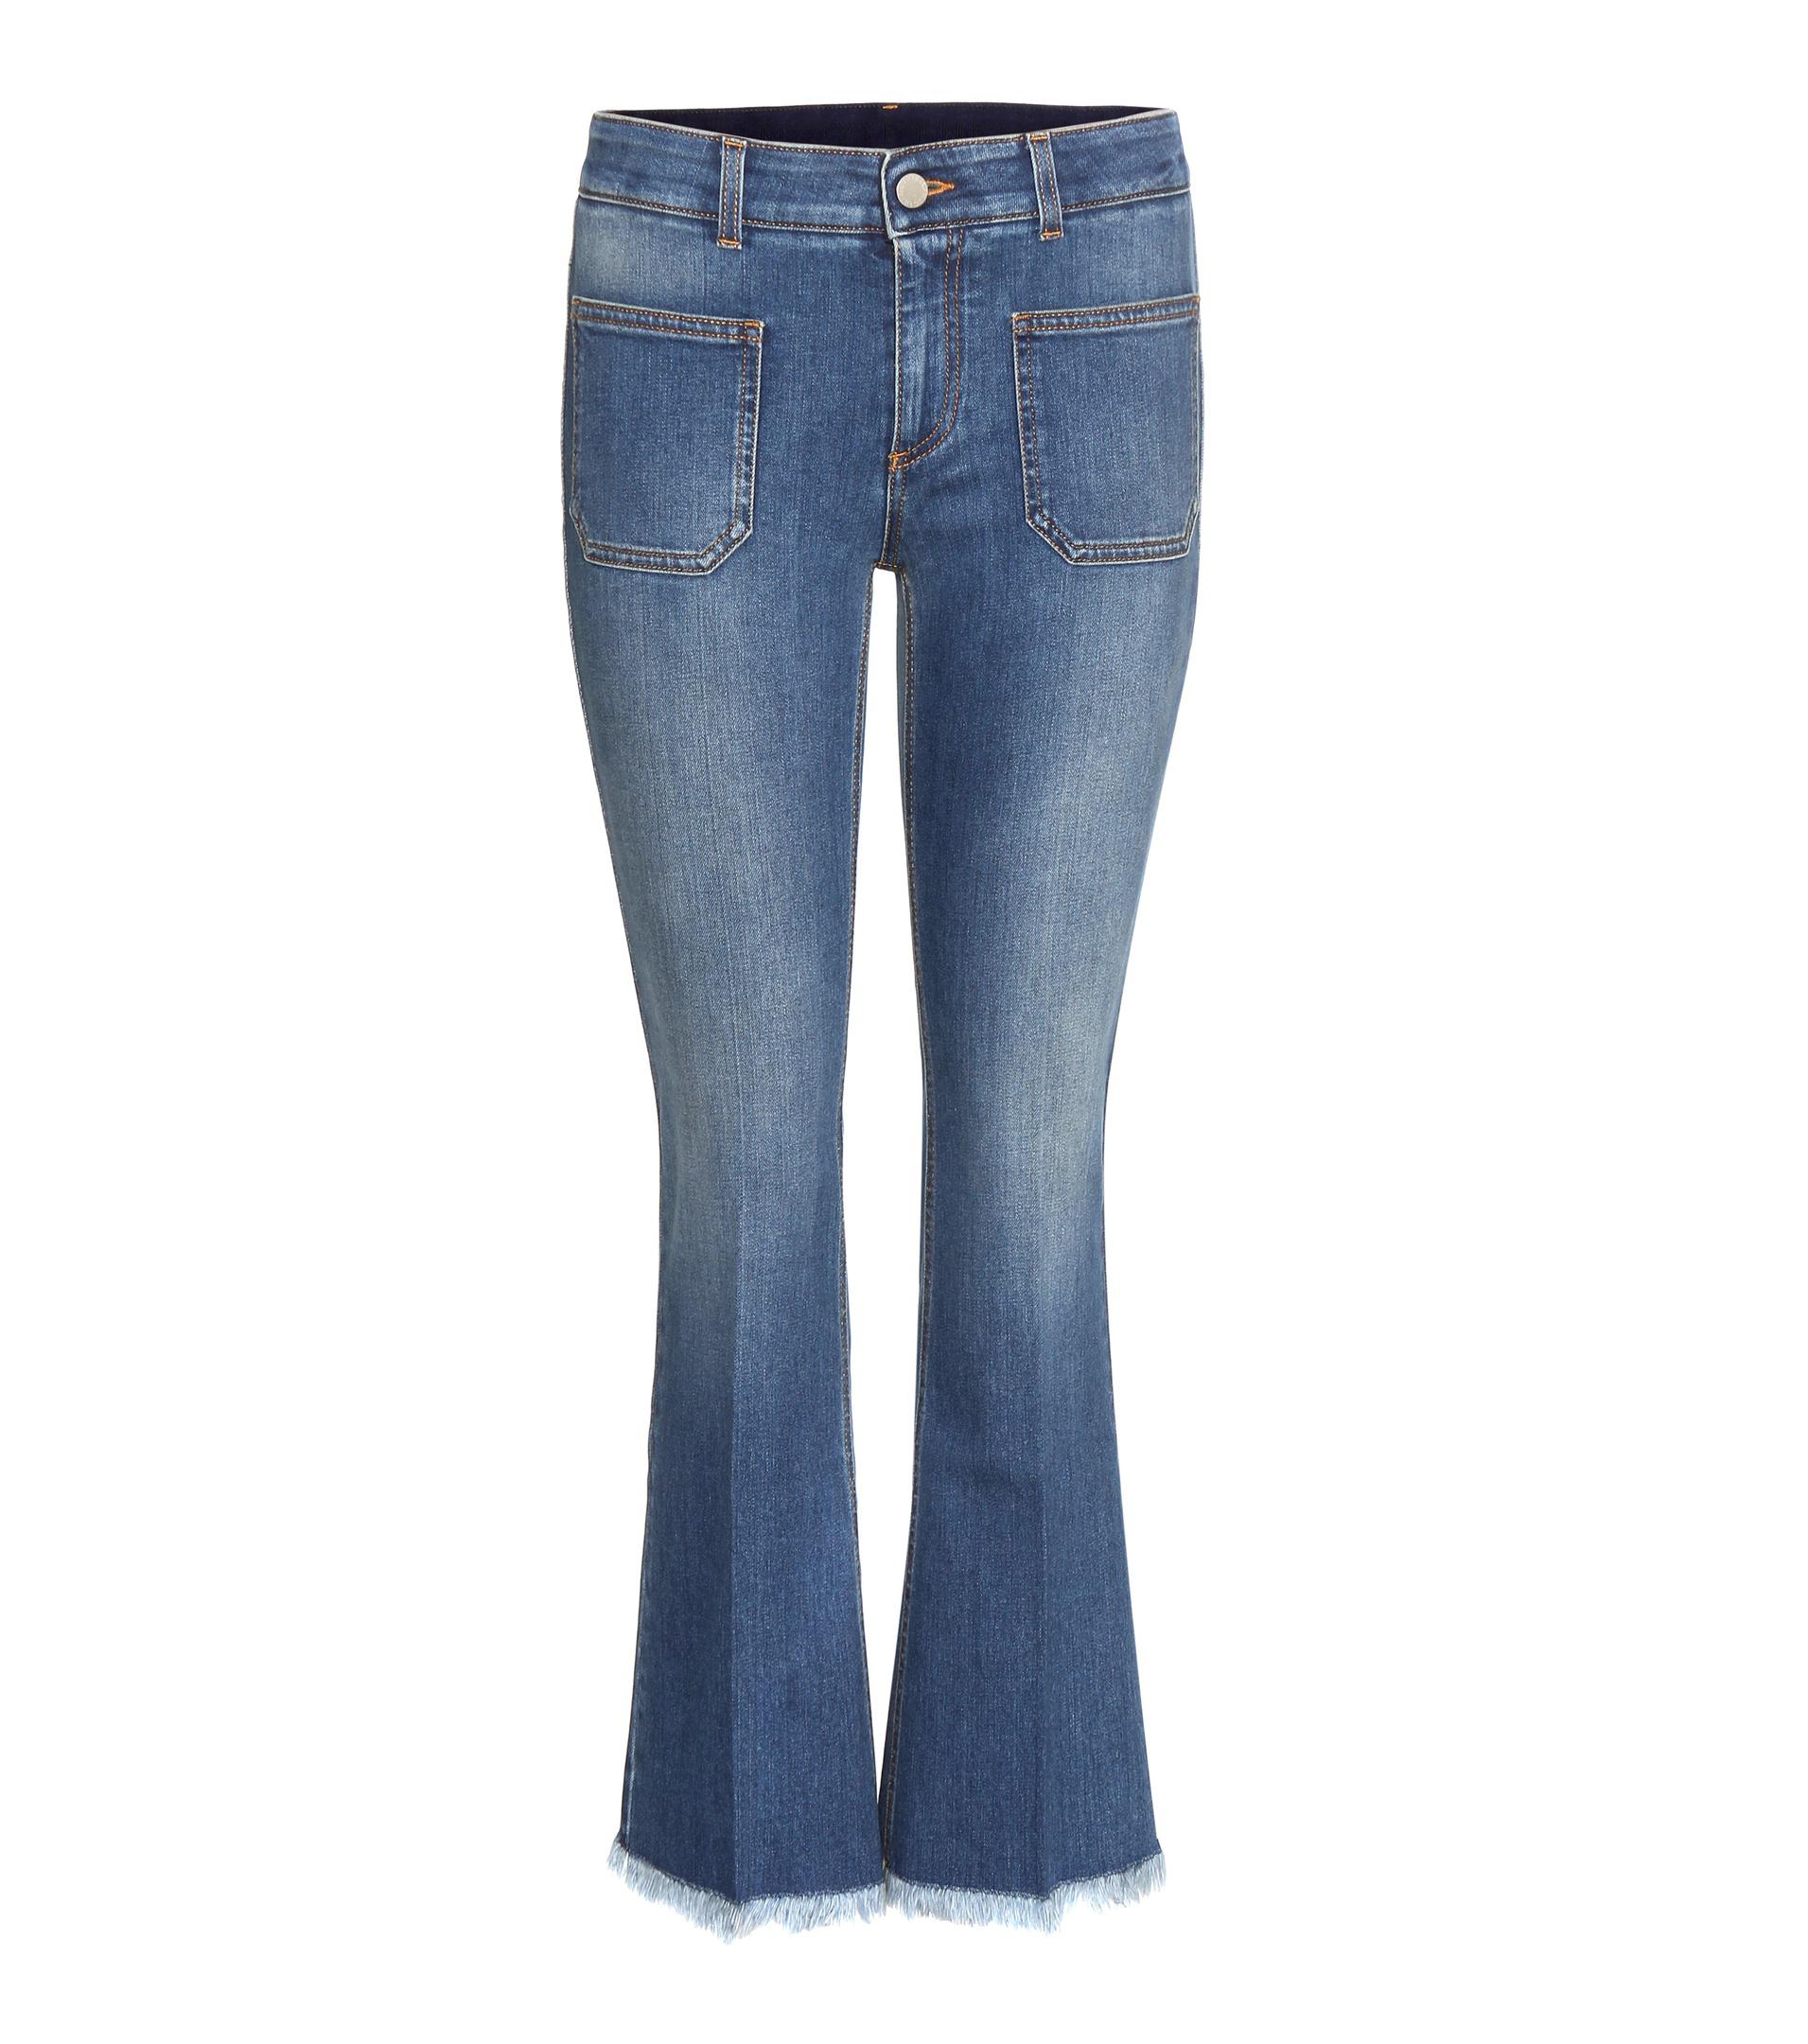 Stella McCartney Distressed Flared Jeans in Blue - Lyst